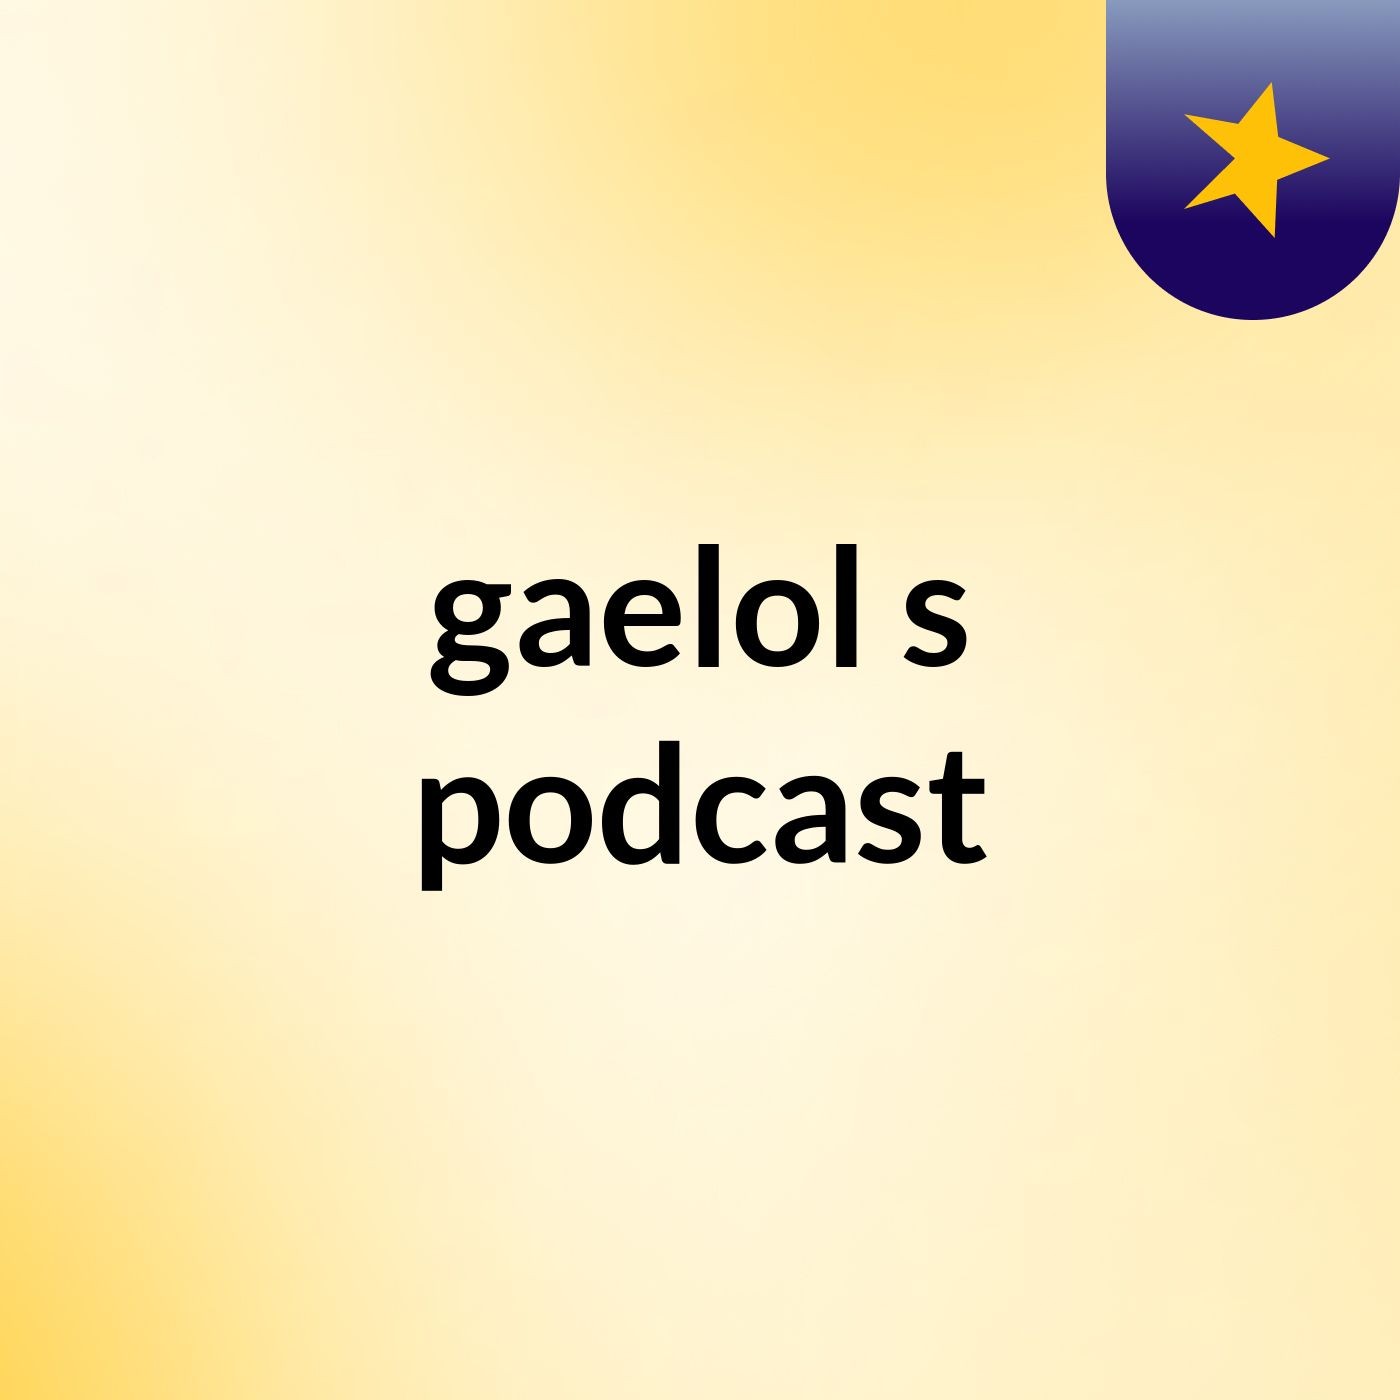 gaelol's podcast